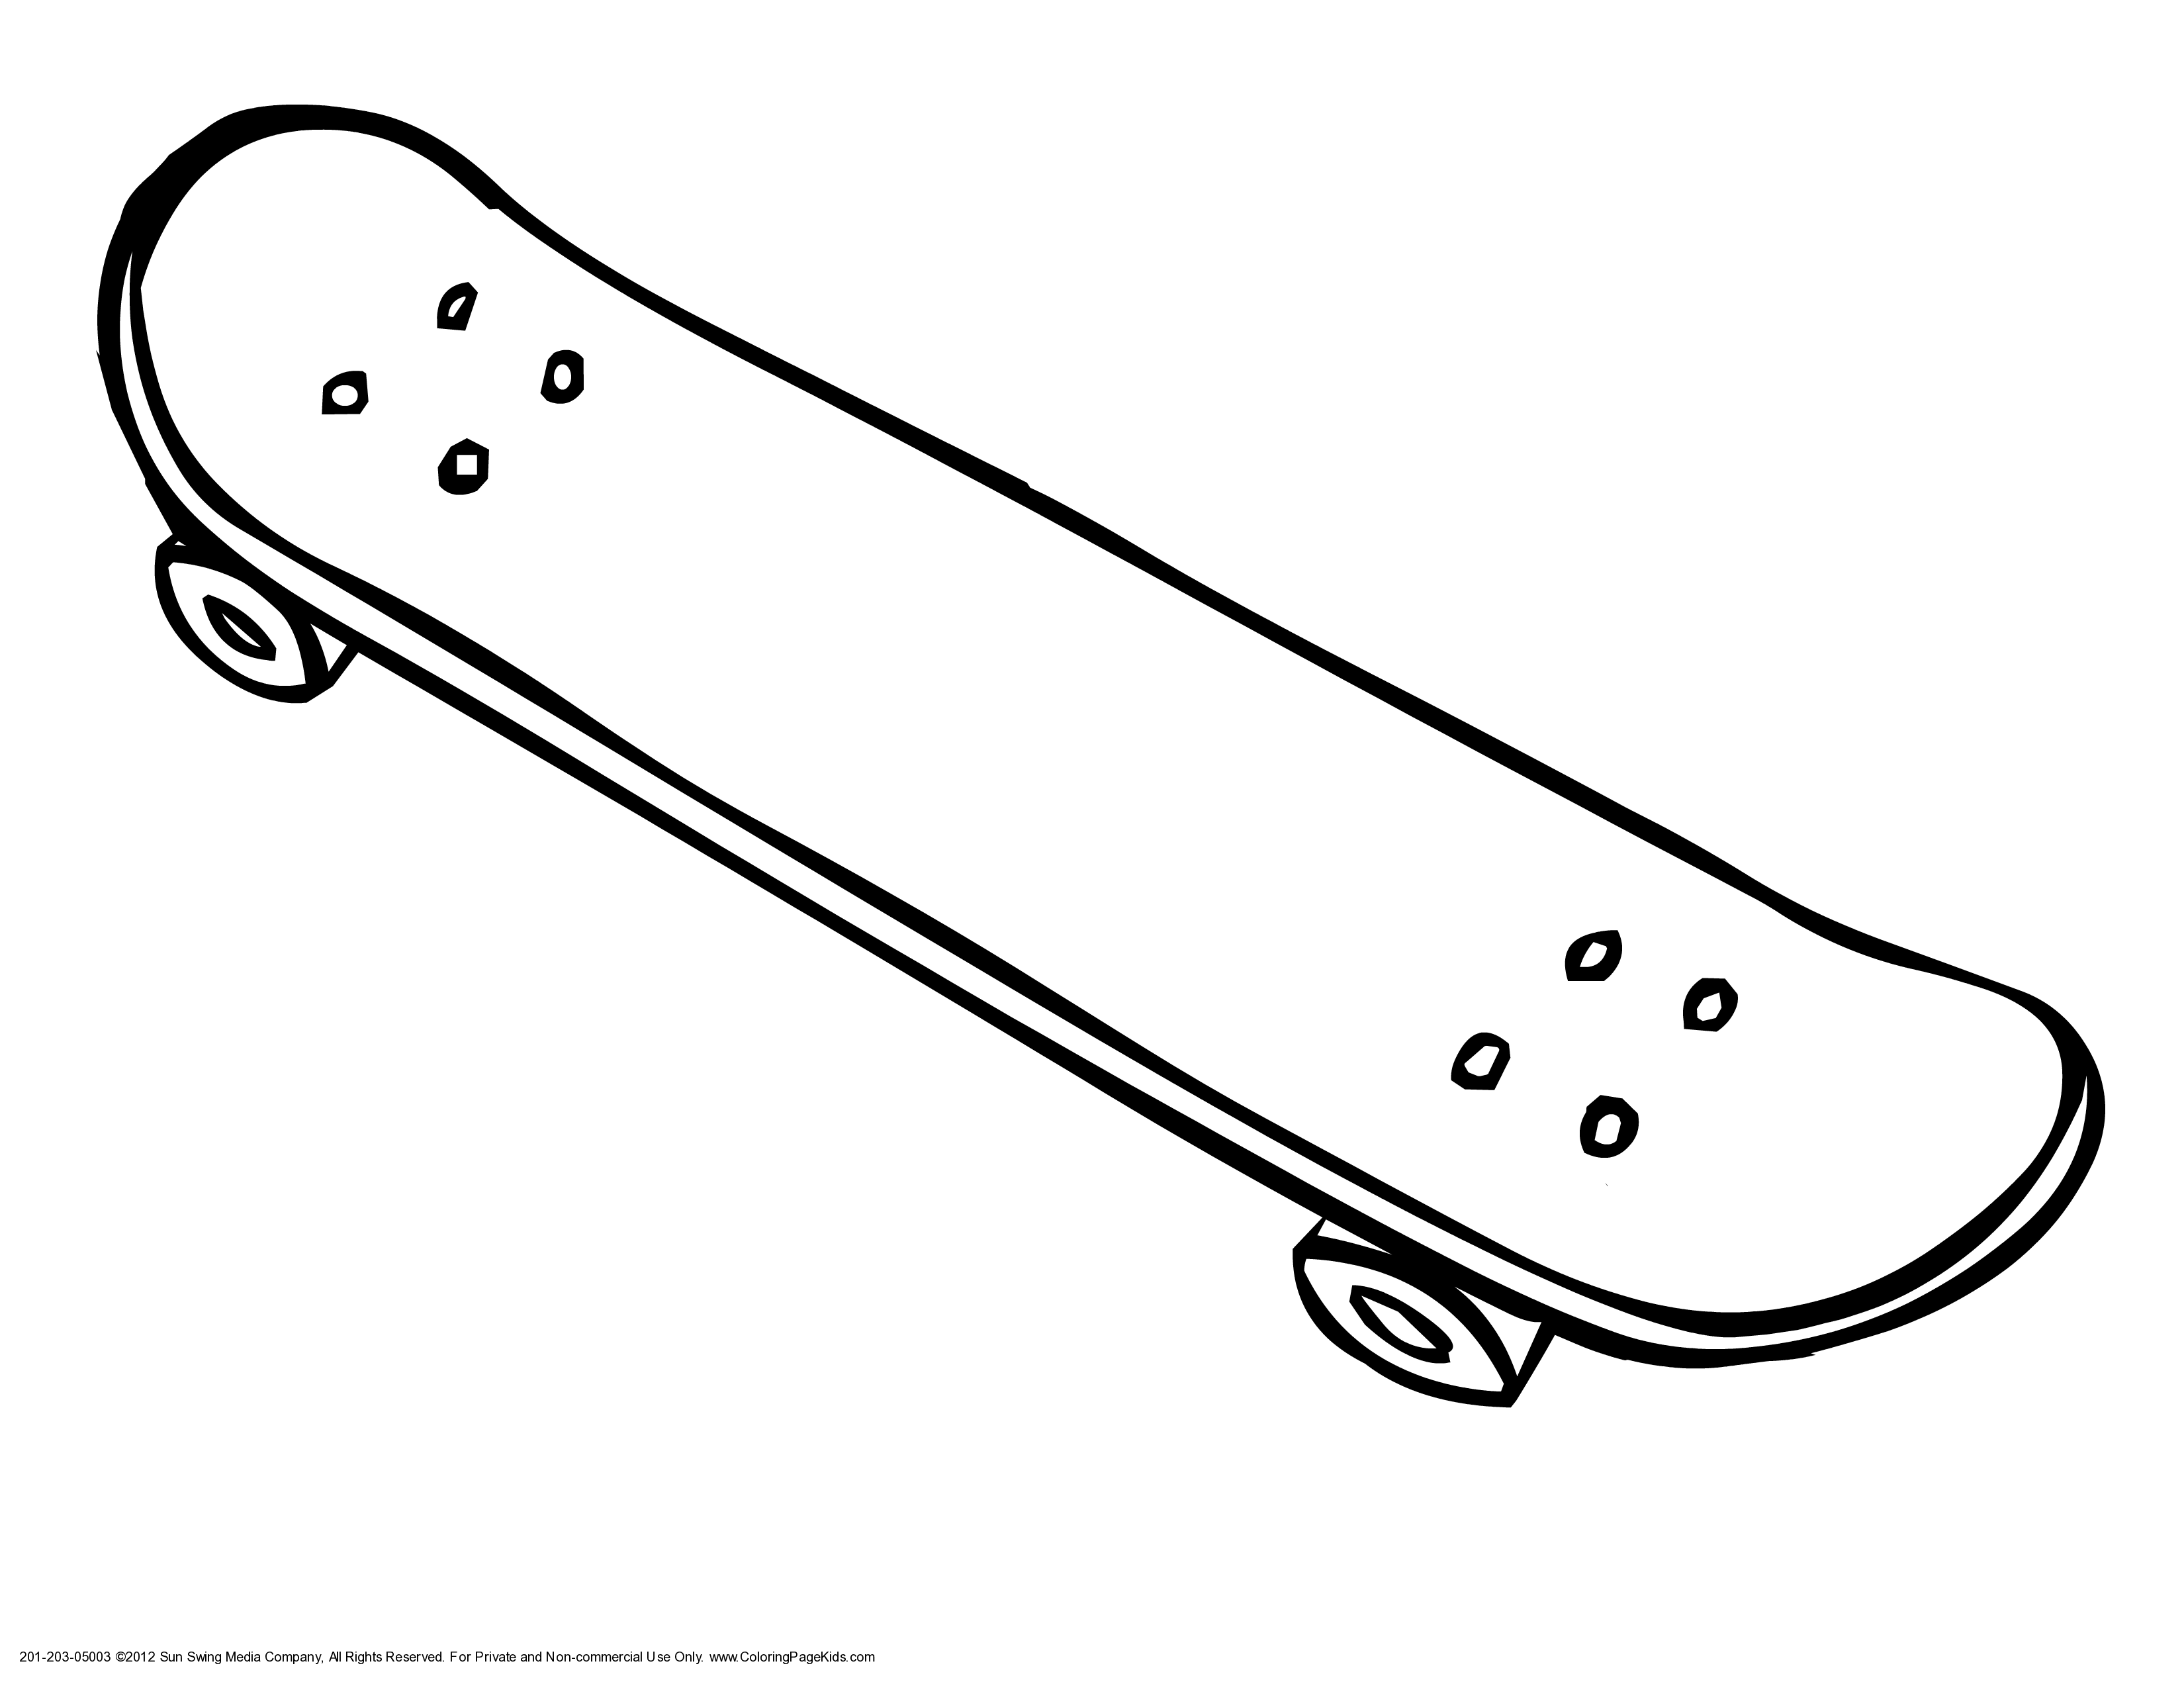 Skateboard clipart #4, Download drawings